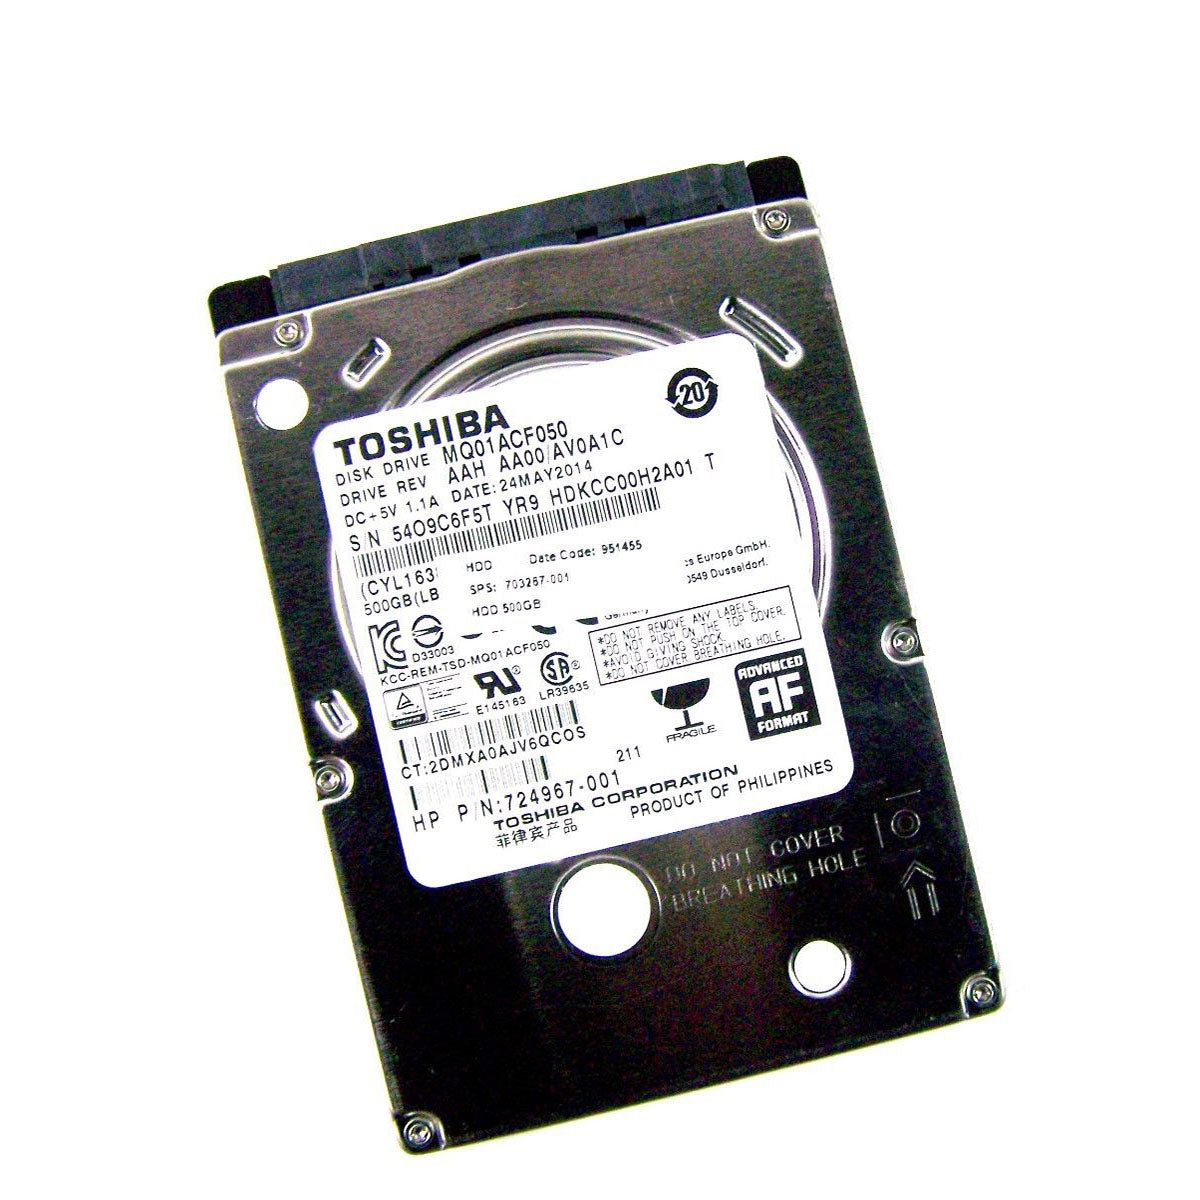 MQ01ACF050 Toshiba 500GB 7200RPM 7mm THIN laptop Hard Drive 2.5